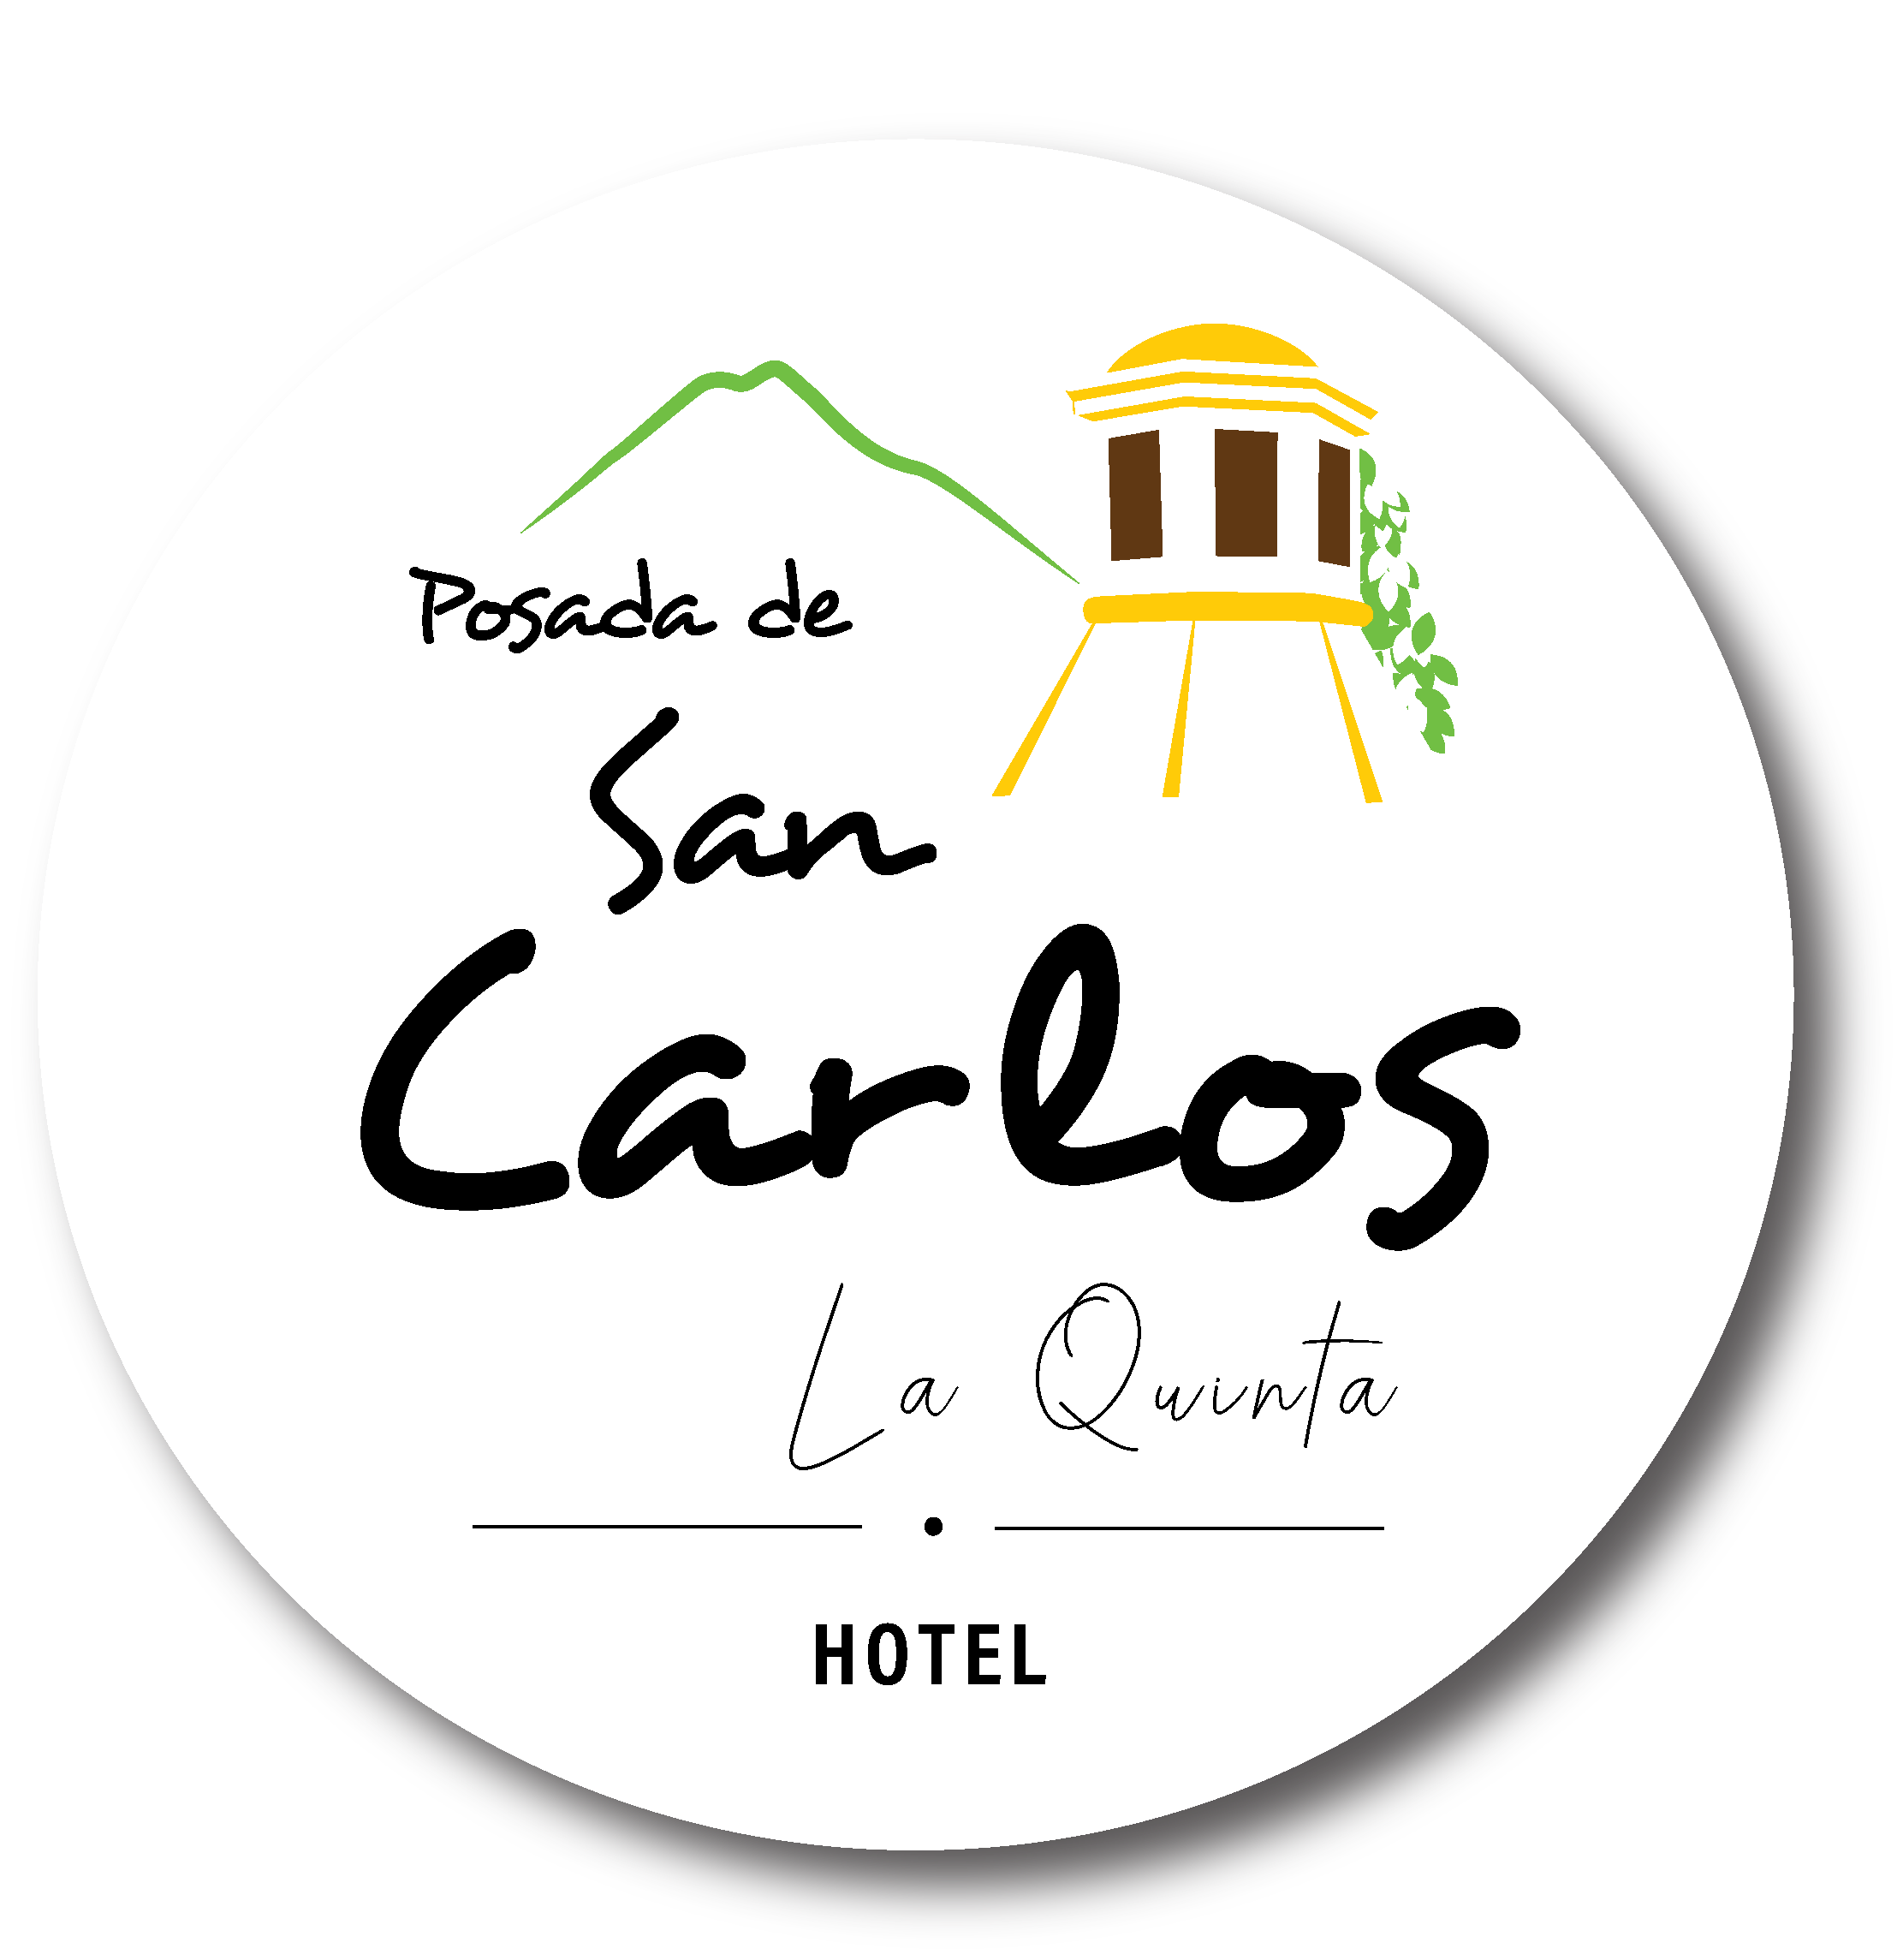 Posada San Carlos